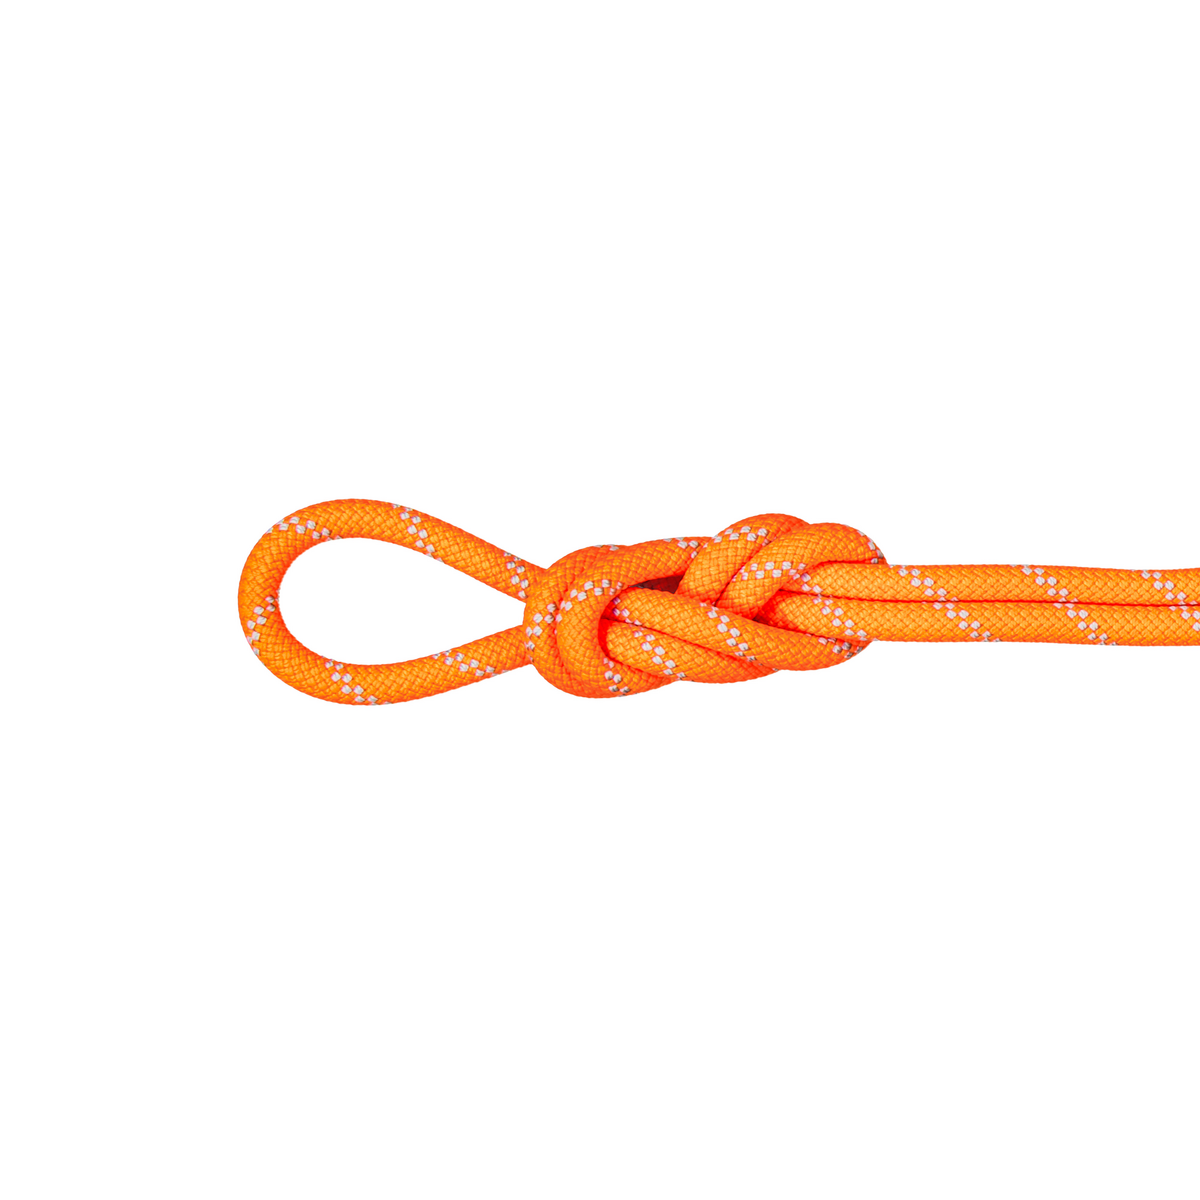 single climbing rope